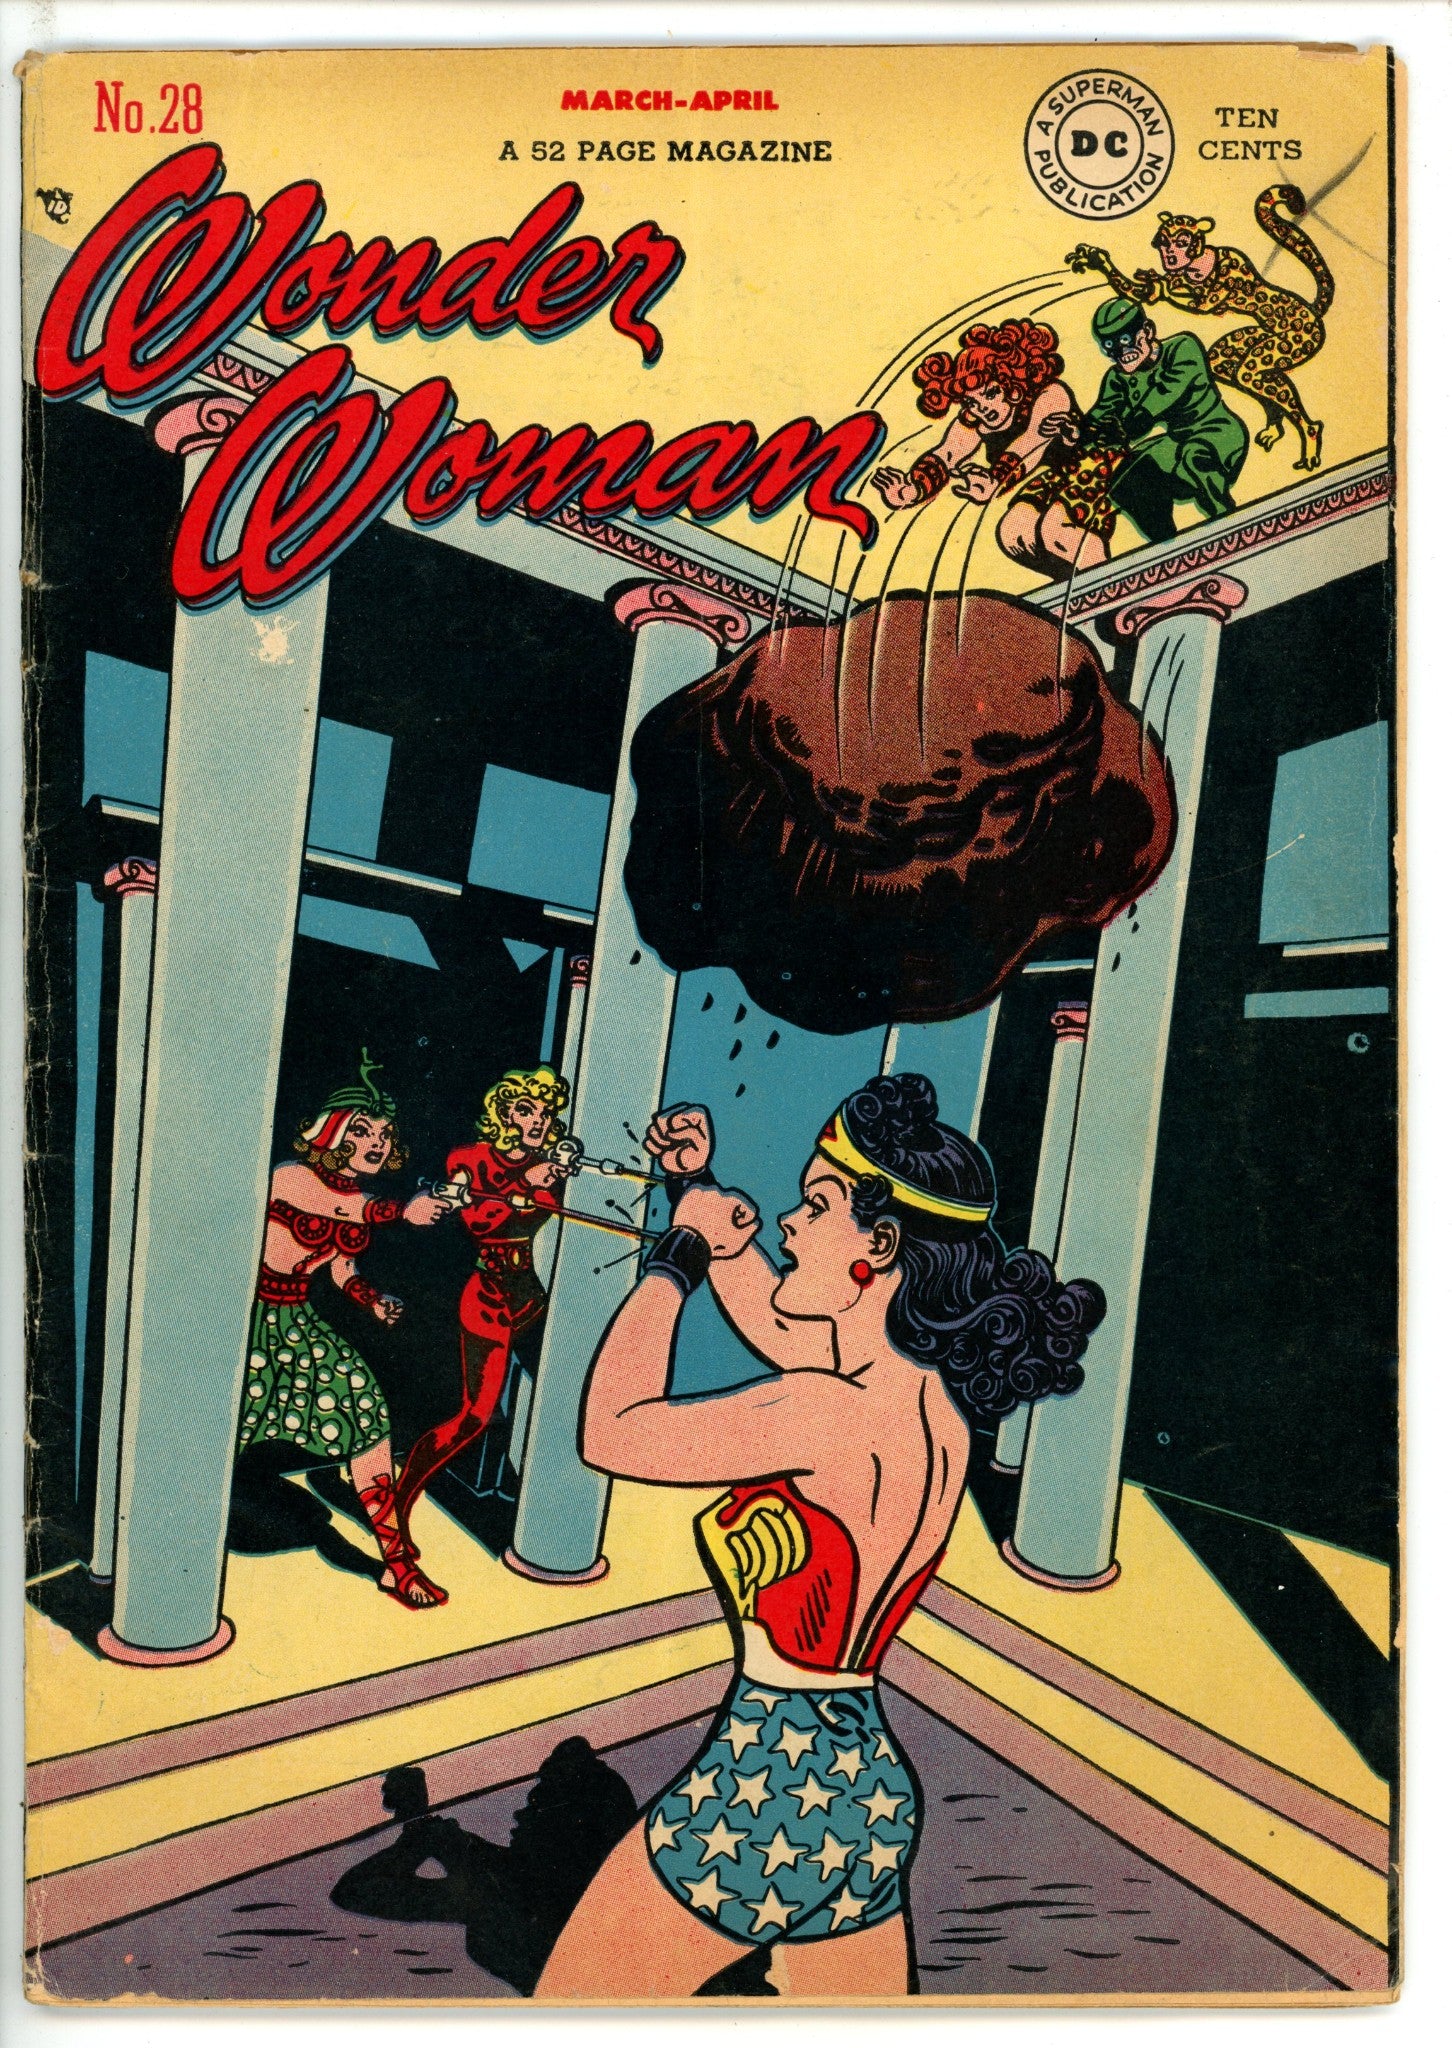 Wonder Woman Vol 1 28 Missing 2 Centrefold WrapsMissing 2 Centrefold Wraps (1948)